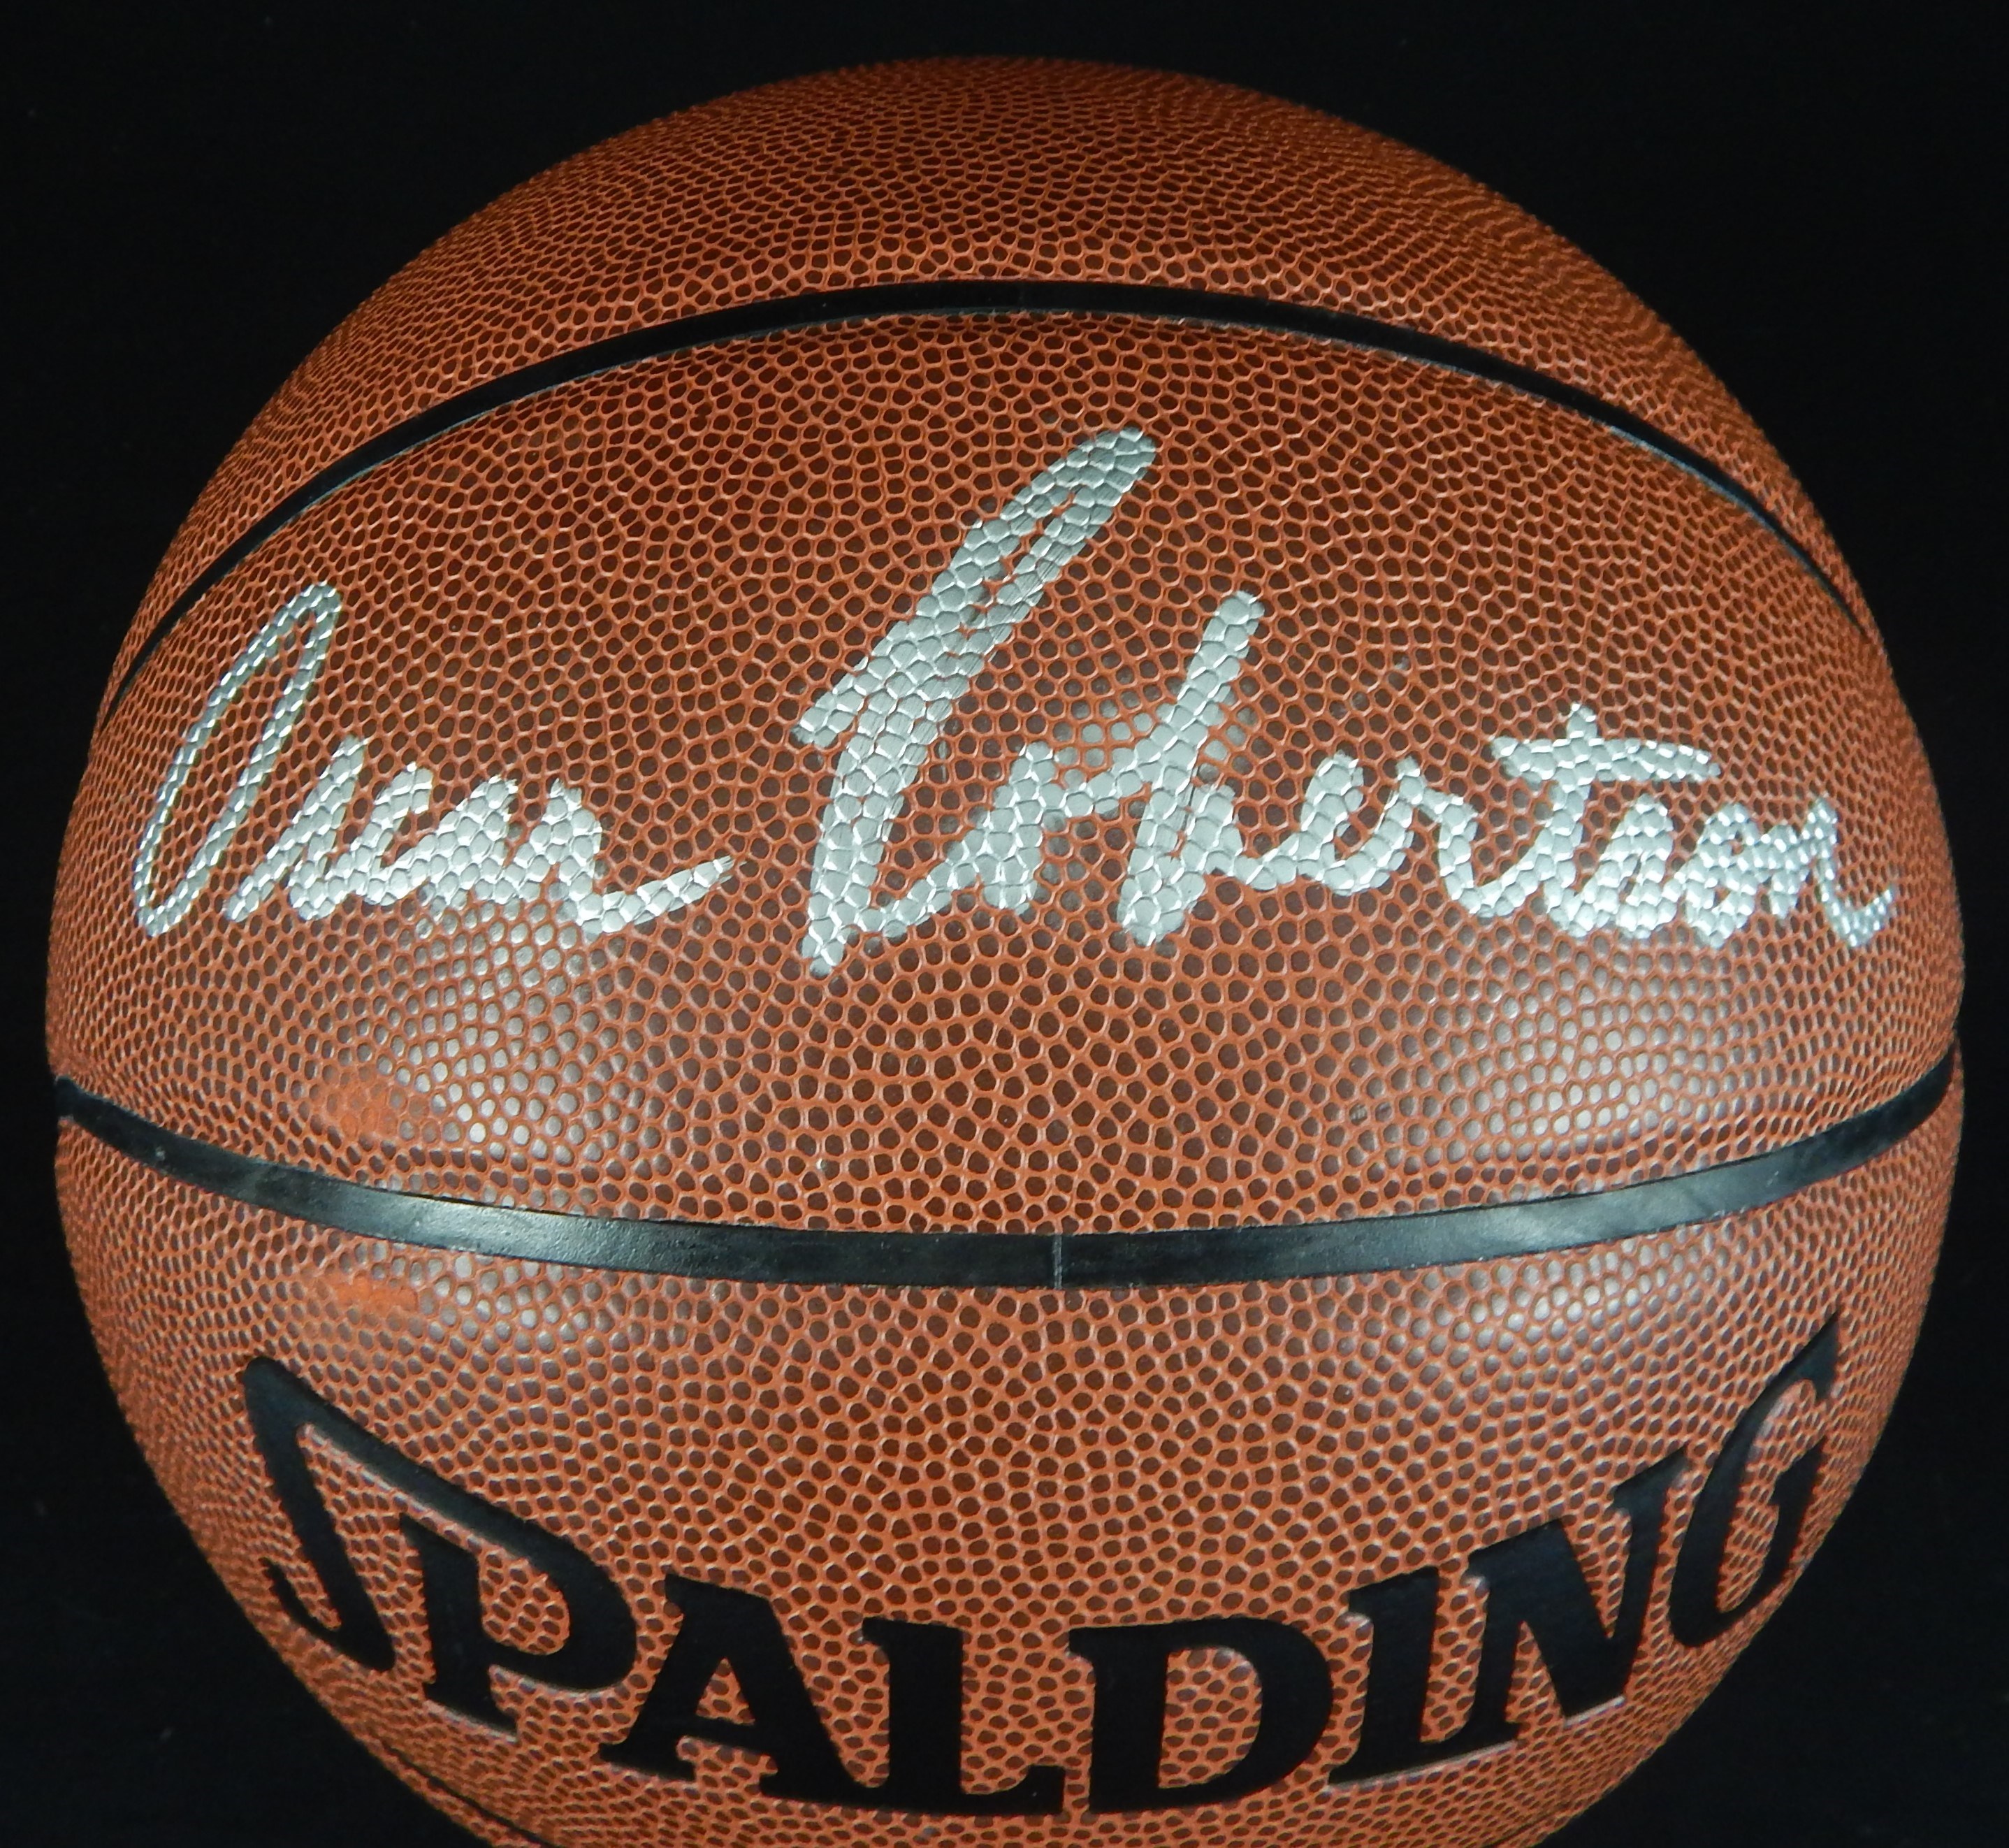 Oscar Robertson Single Signed Basketball (PSA/DNA)